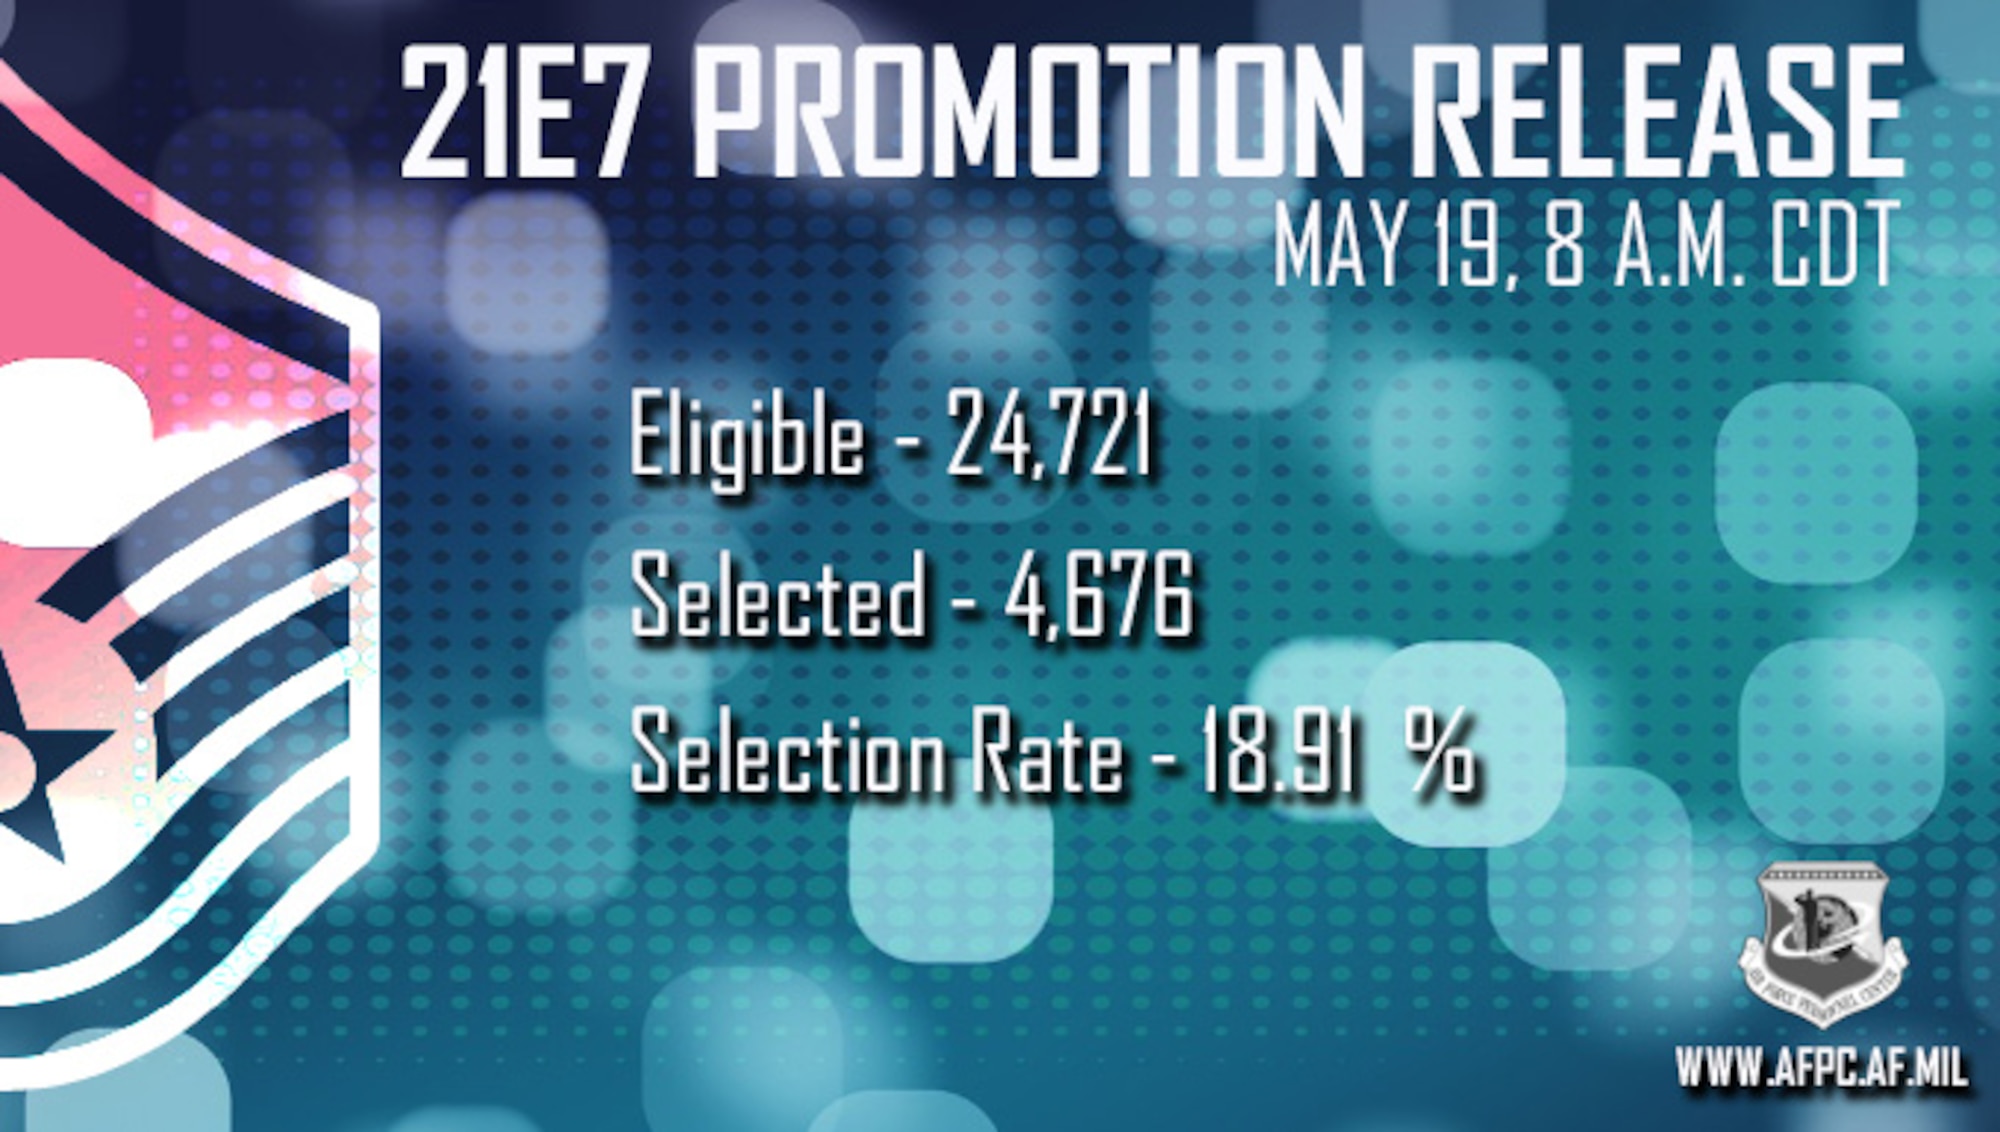 Blue Graphic announcing 21E7 promotion statistics